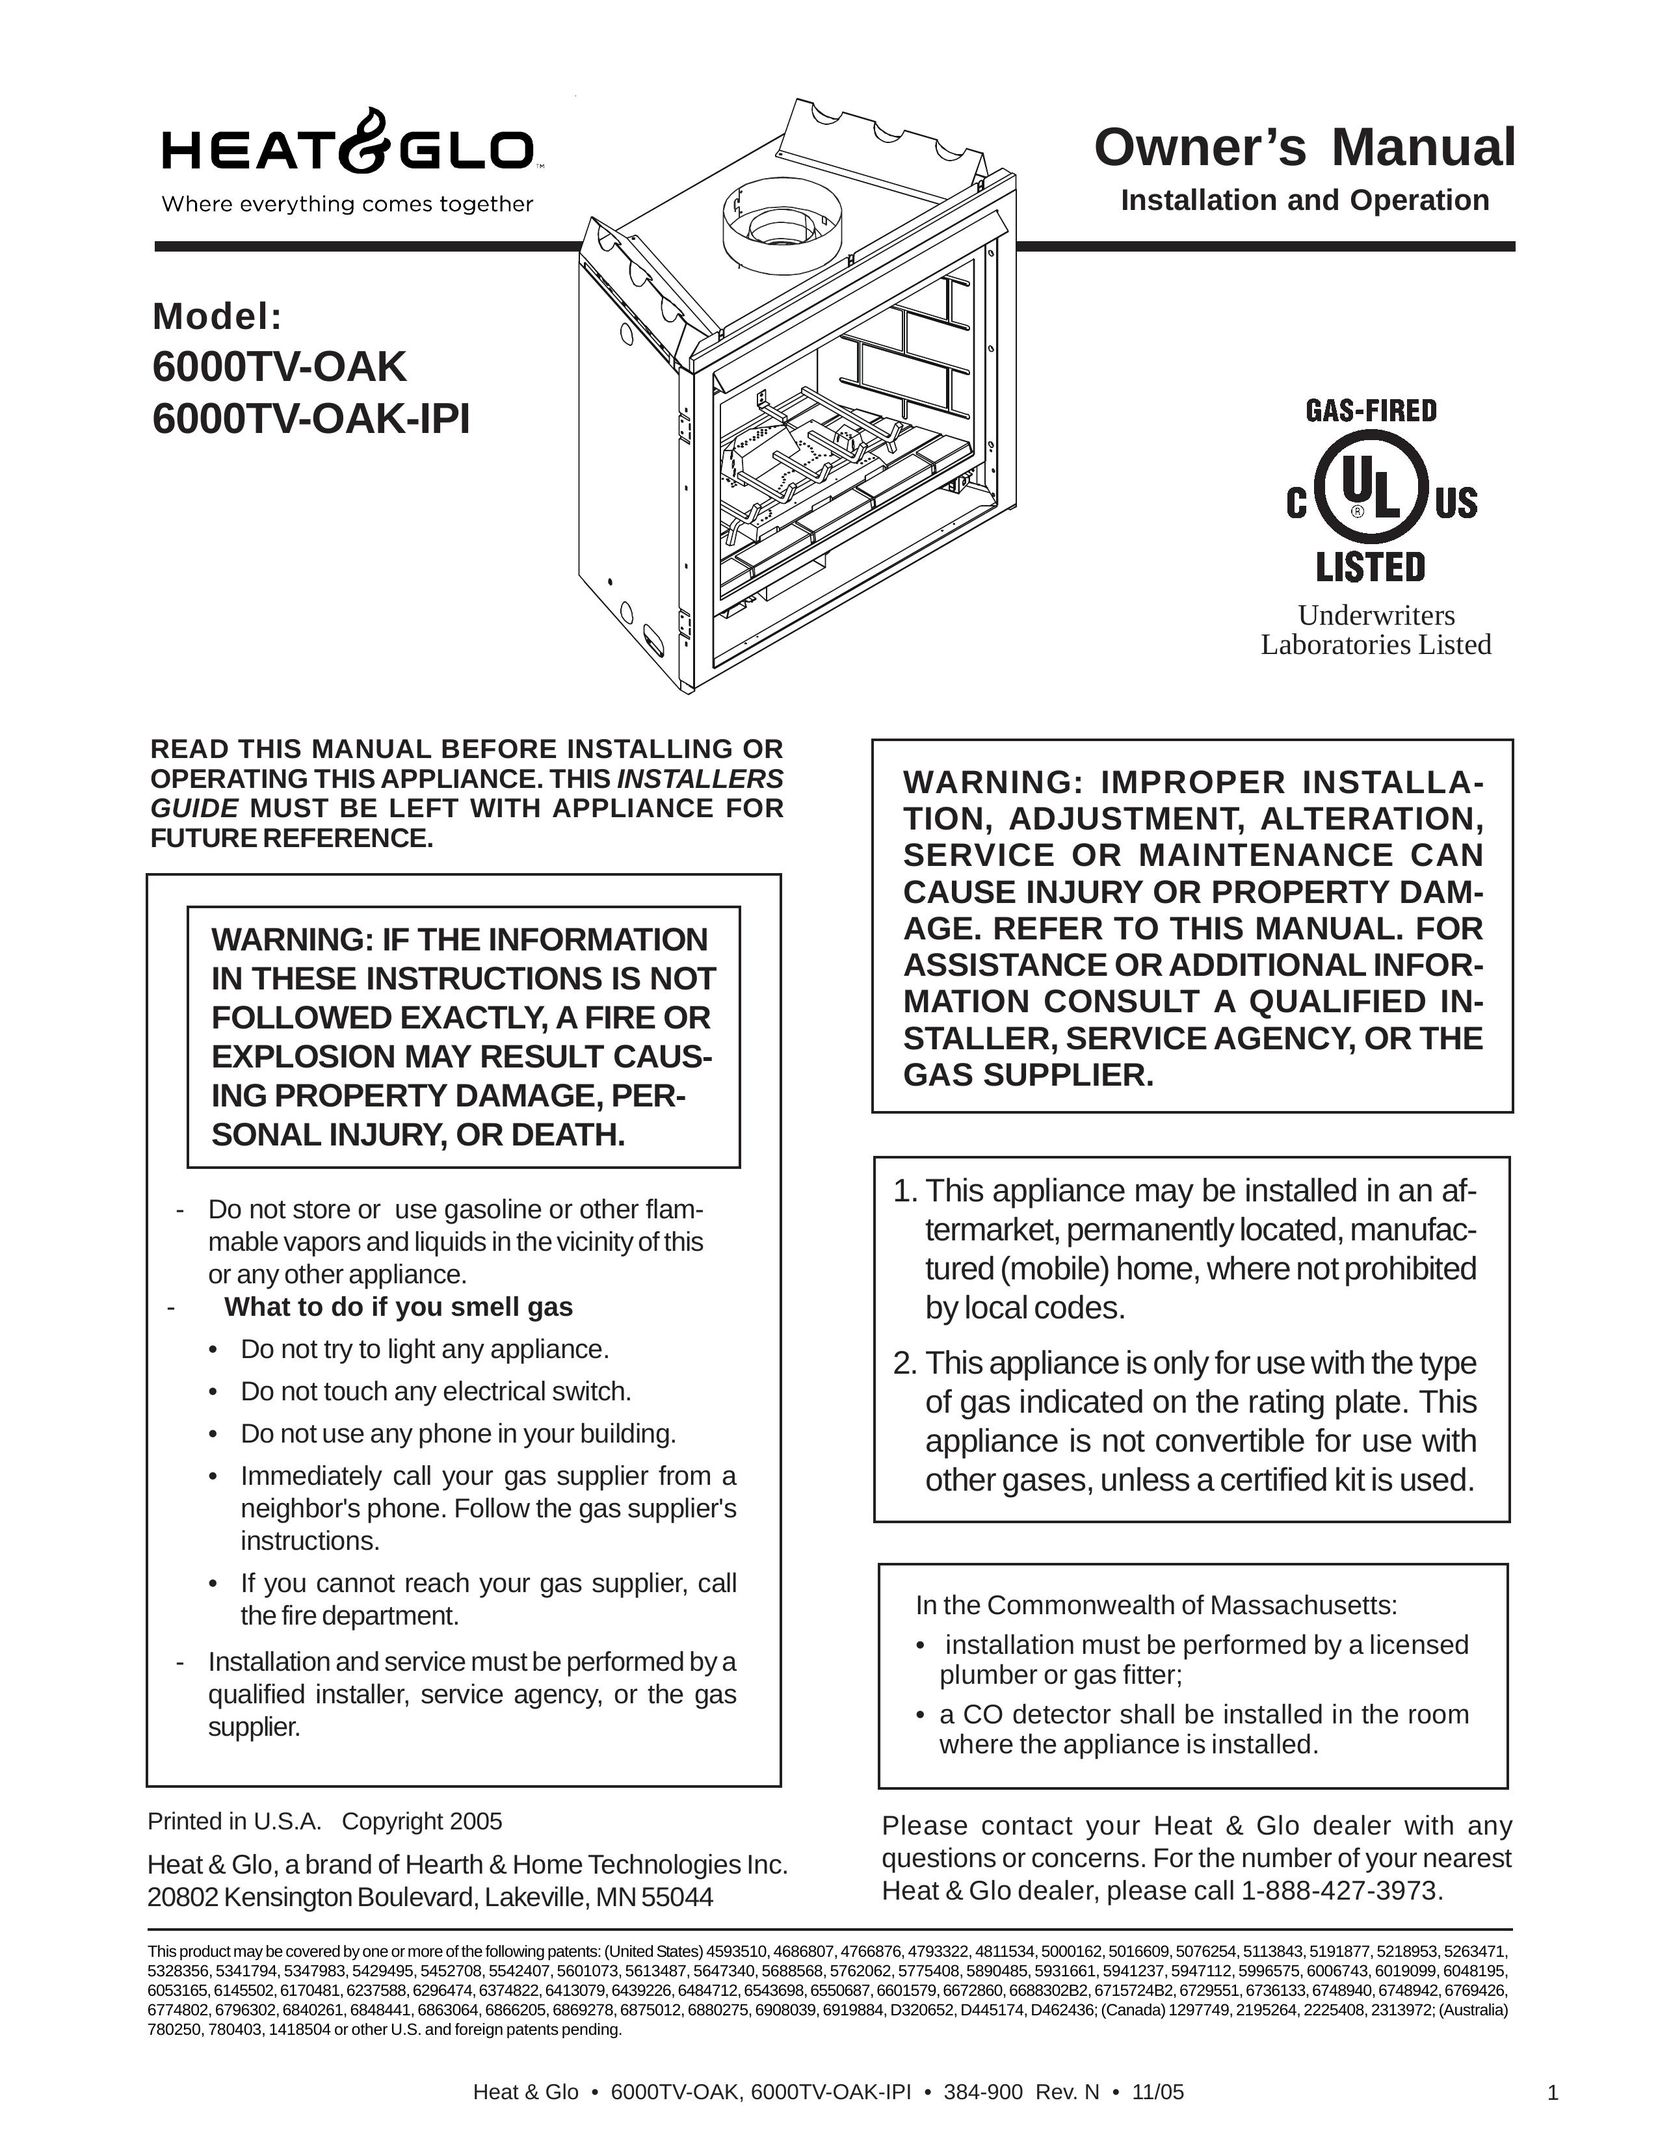 Heat & Glo LifeStyle 6000TV-OAK Indoor Fireplace User Manual